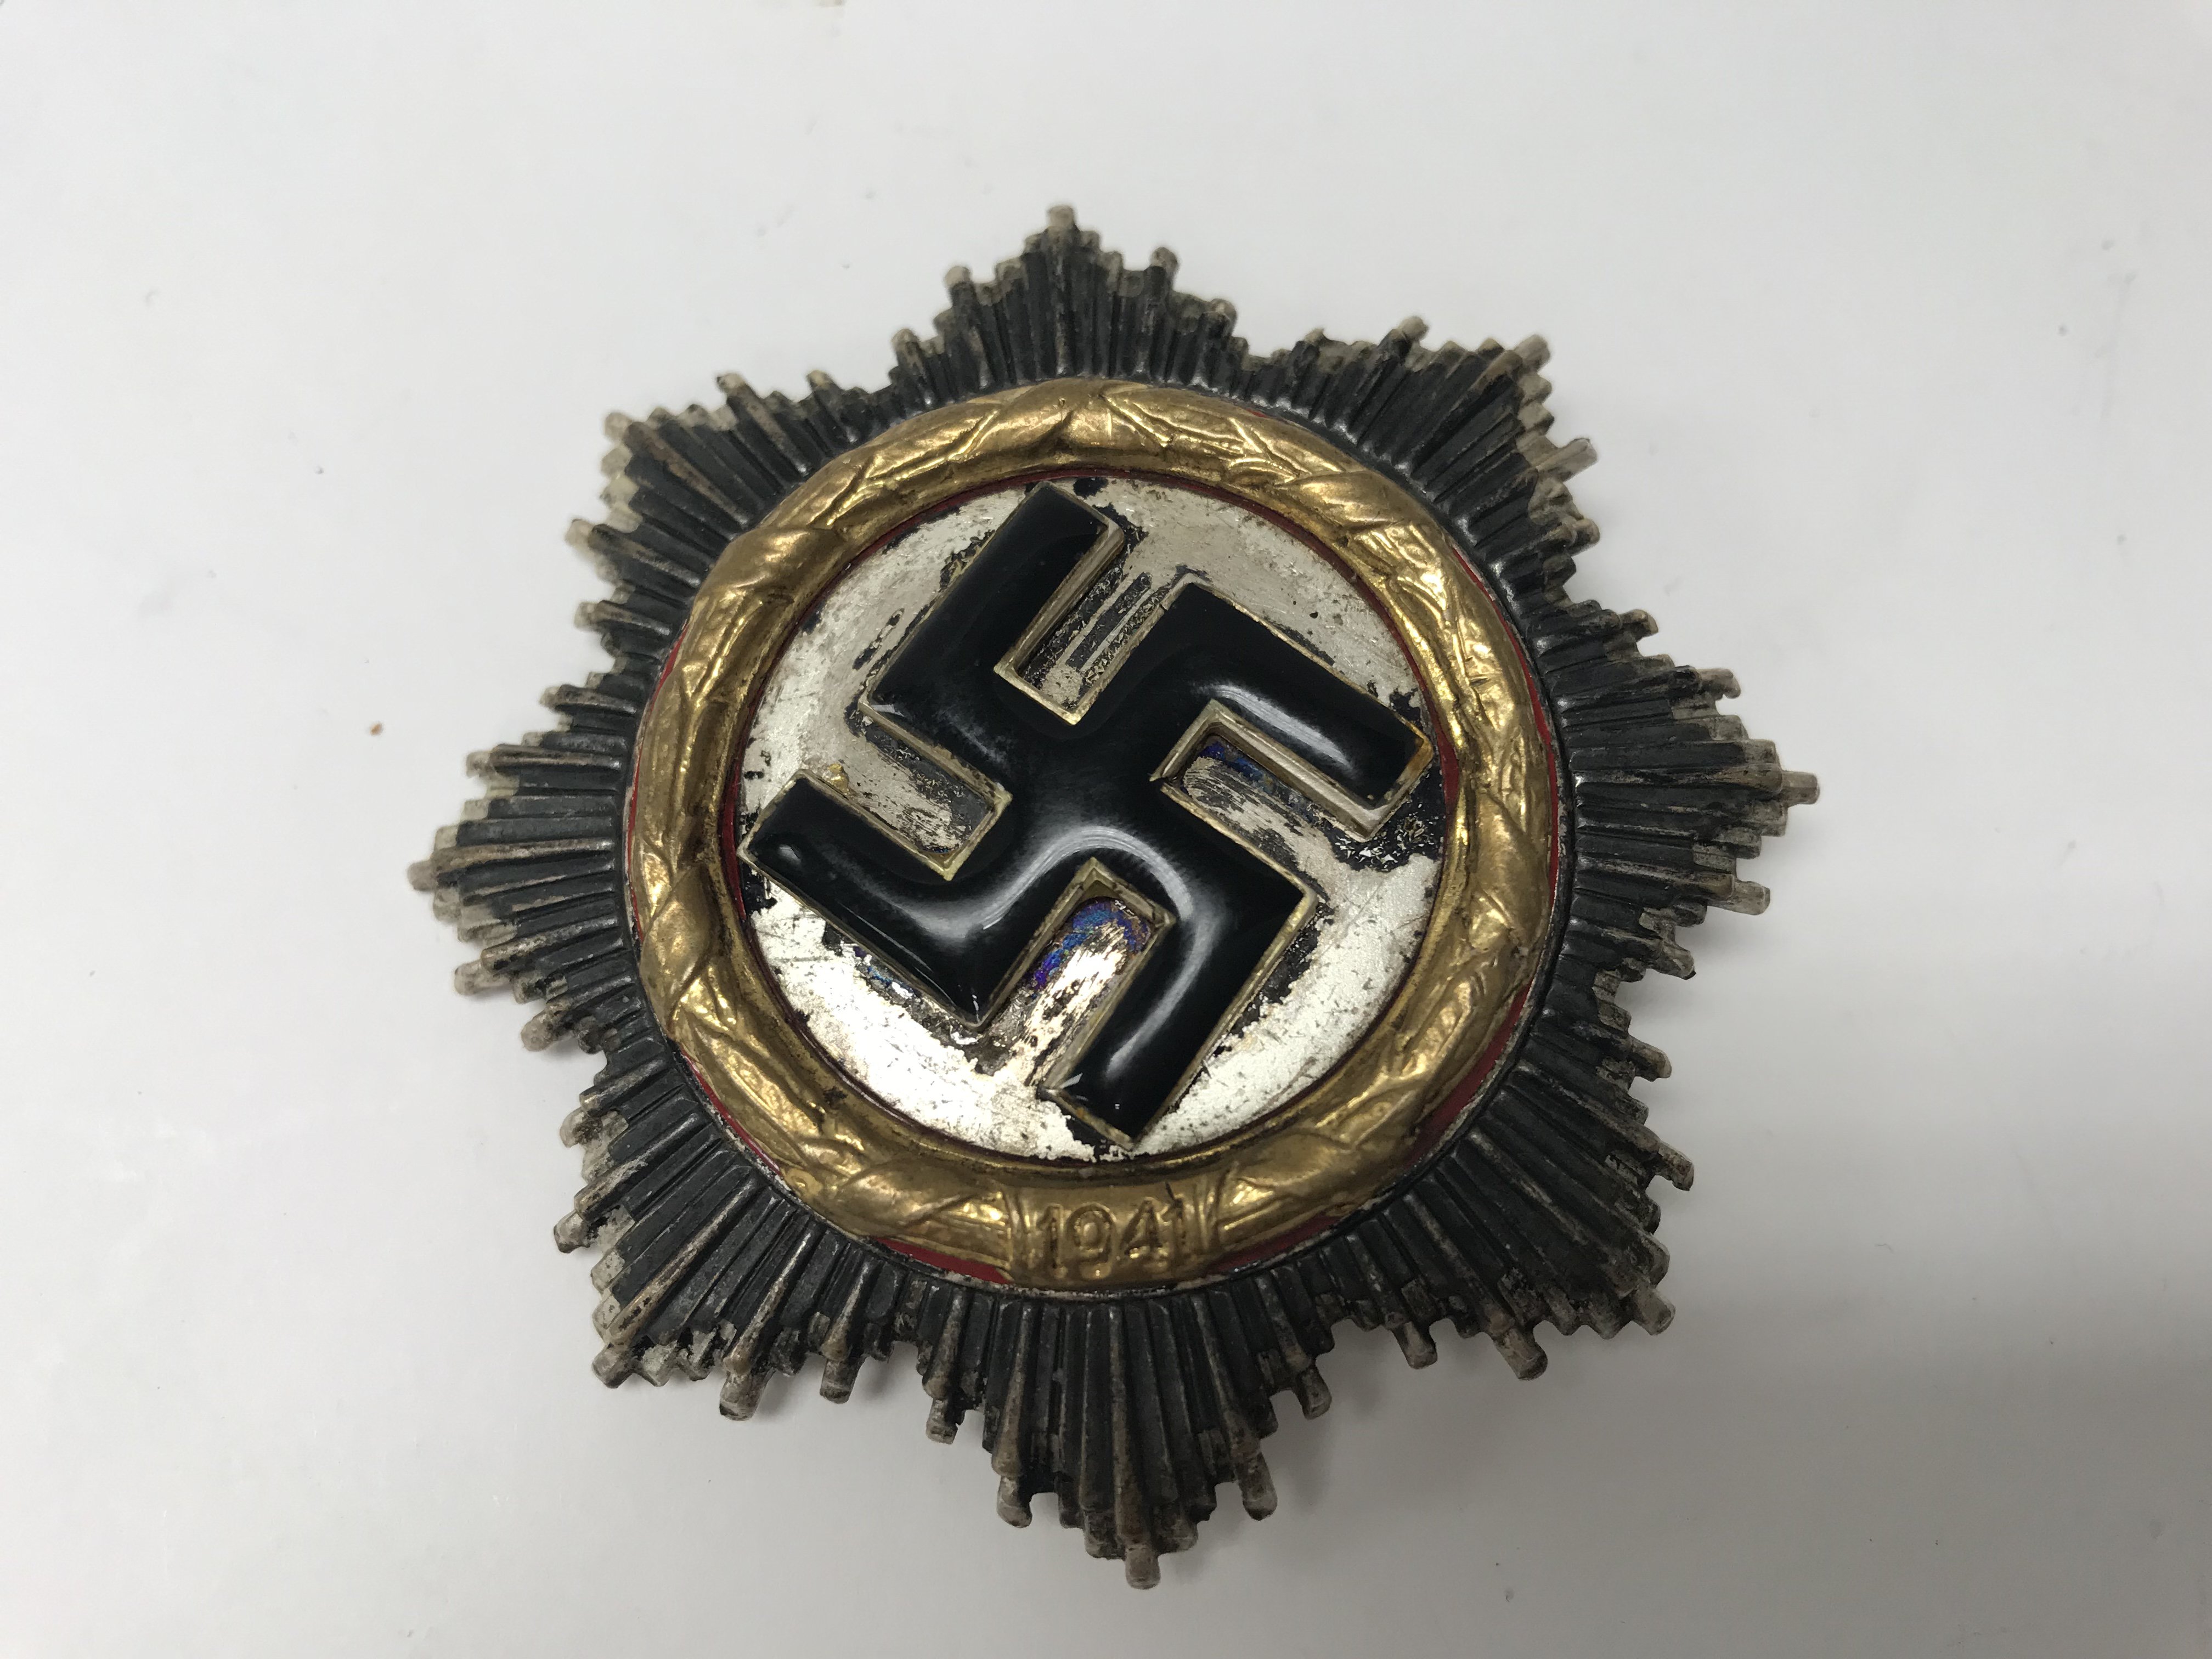 A German WW2 Deutschland Kreuz German Cross in gold with a fitted case. 4 rivets.